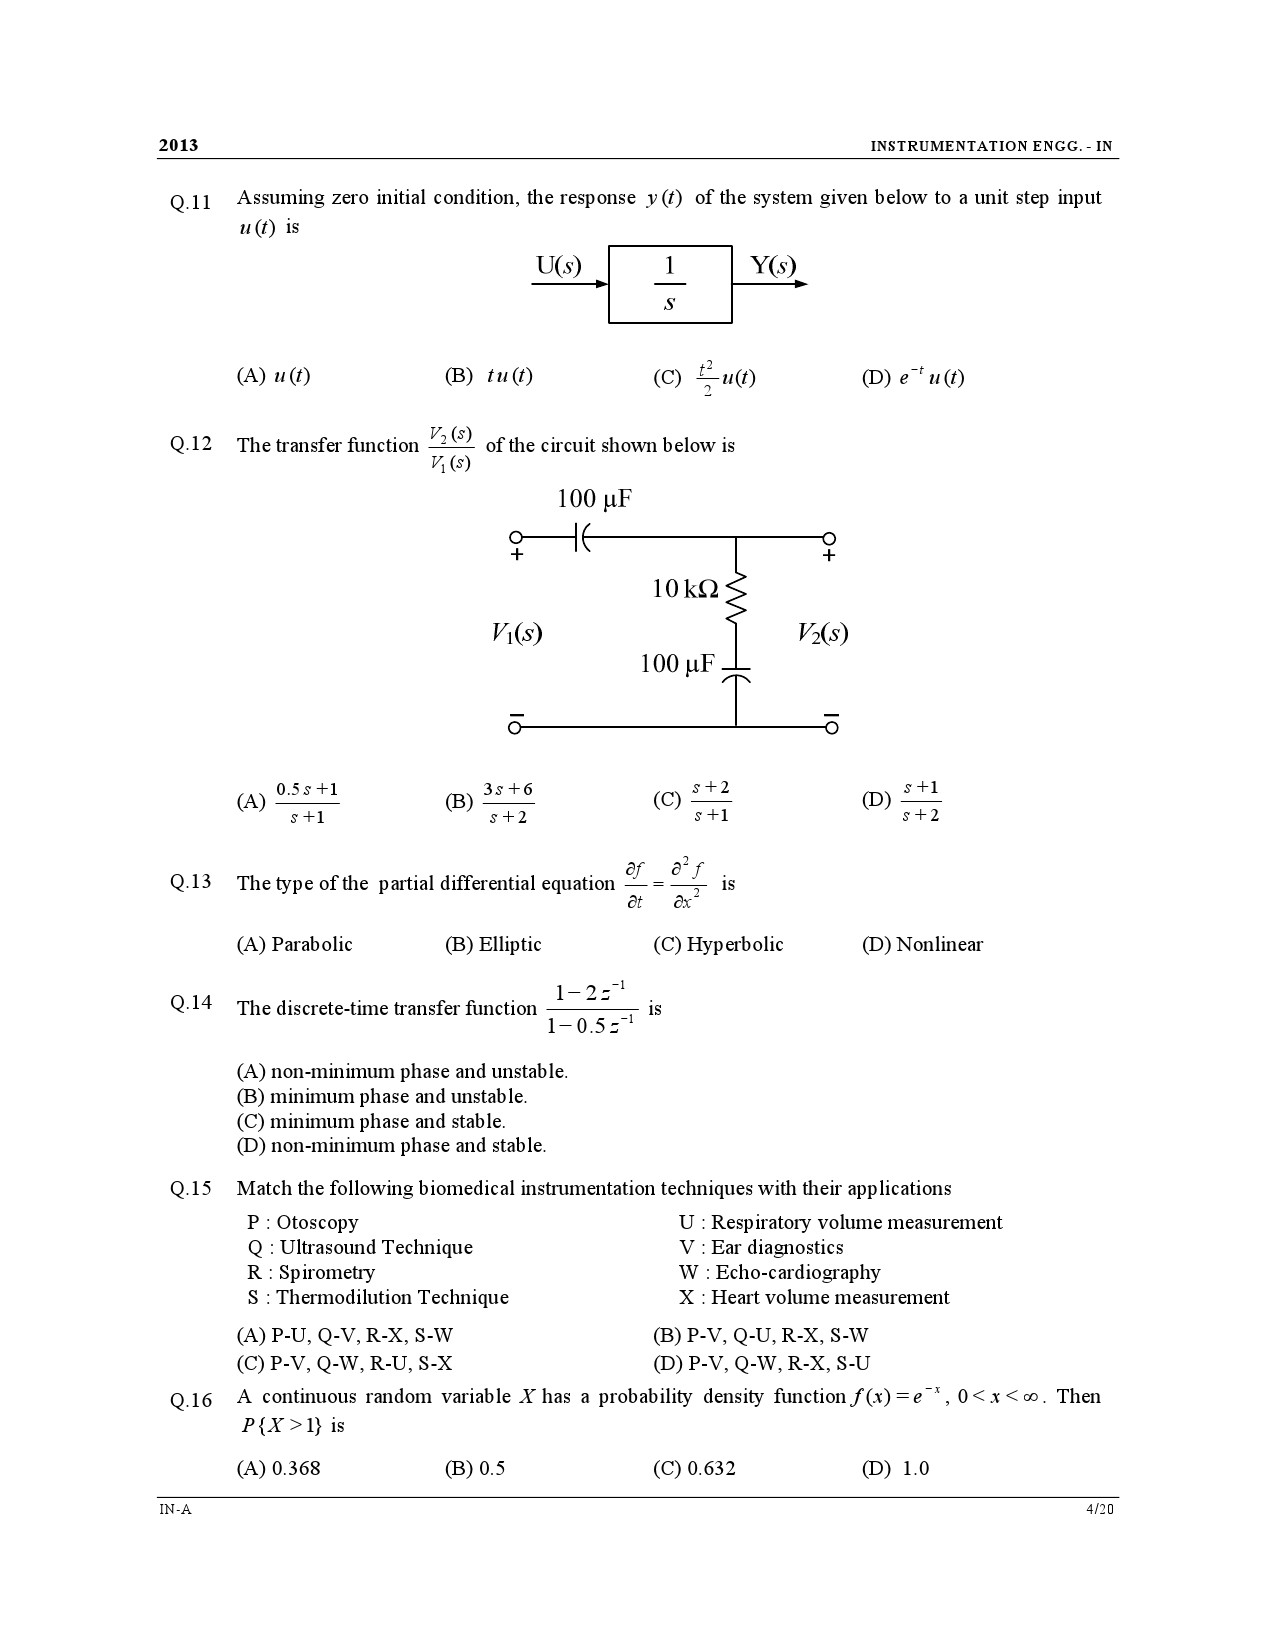 GATE Exam Question Paper 2013 Instrumentation Engineering 4